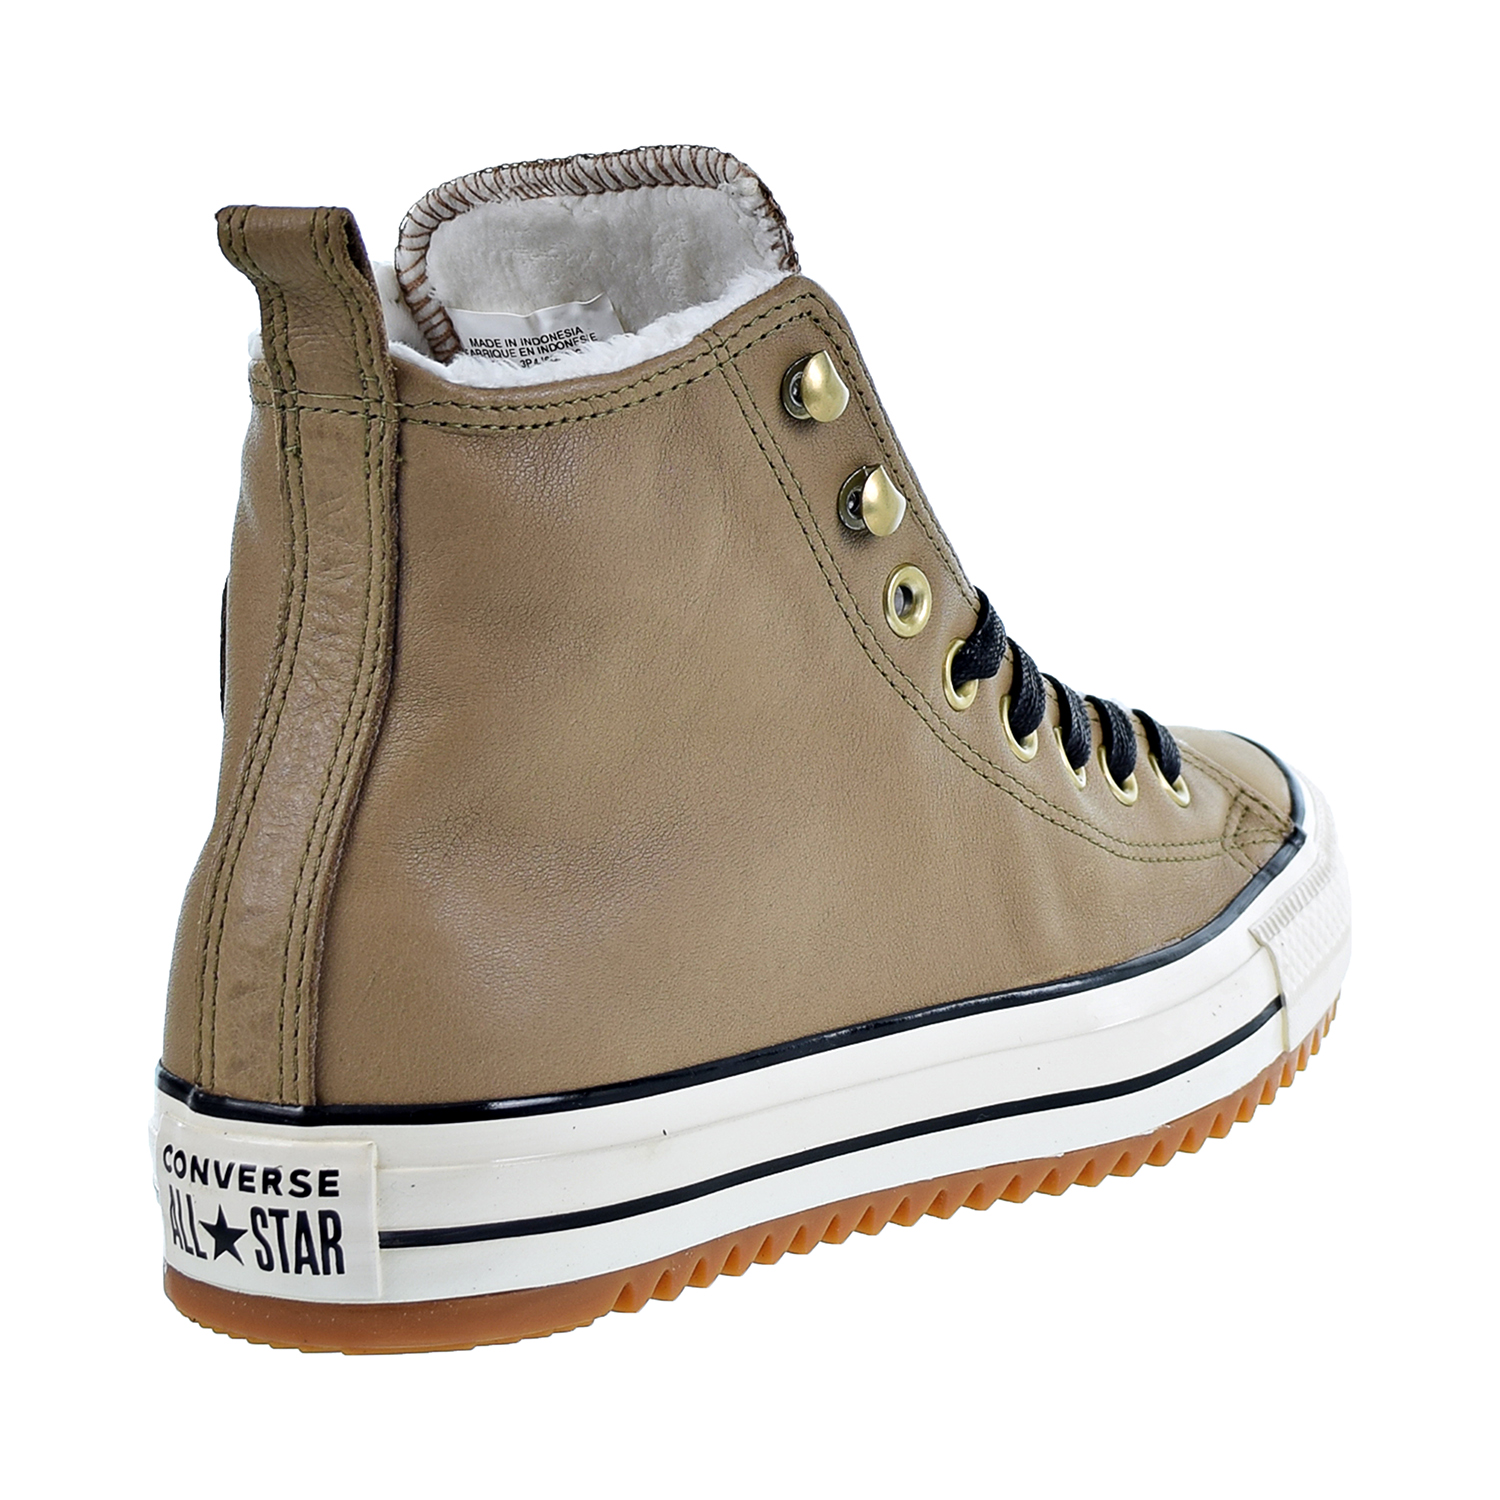 Converse Chuck Taylor All Star Hiker Boot Hi Unisex/Men's Shoes Teak-Black-Ivory 162479c - image 3 of 6